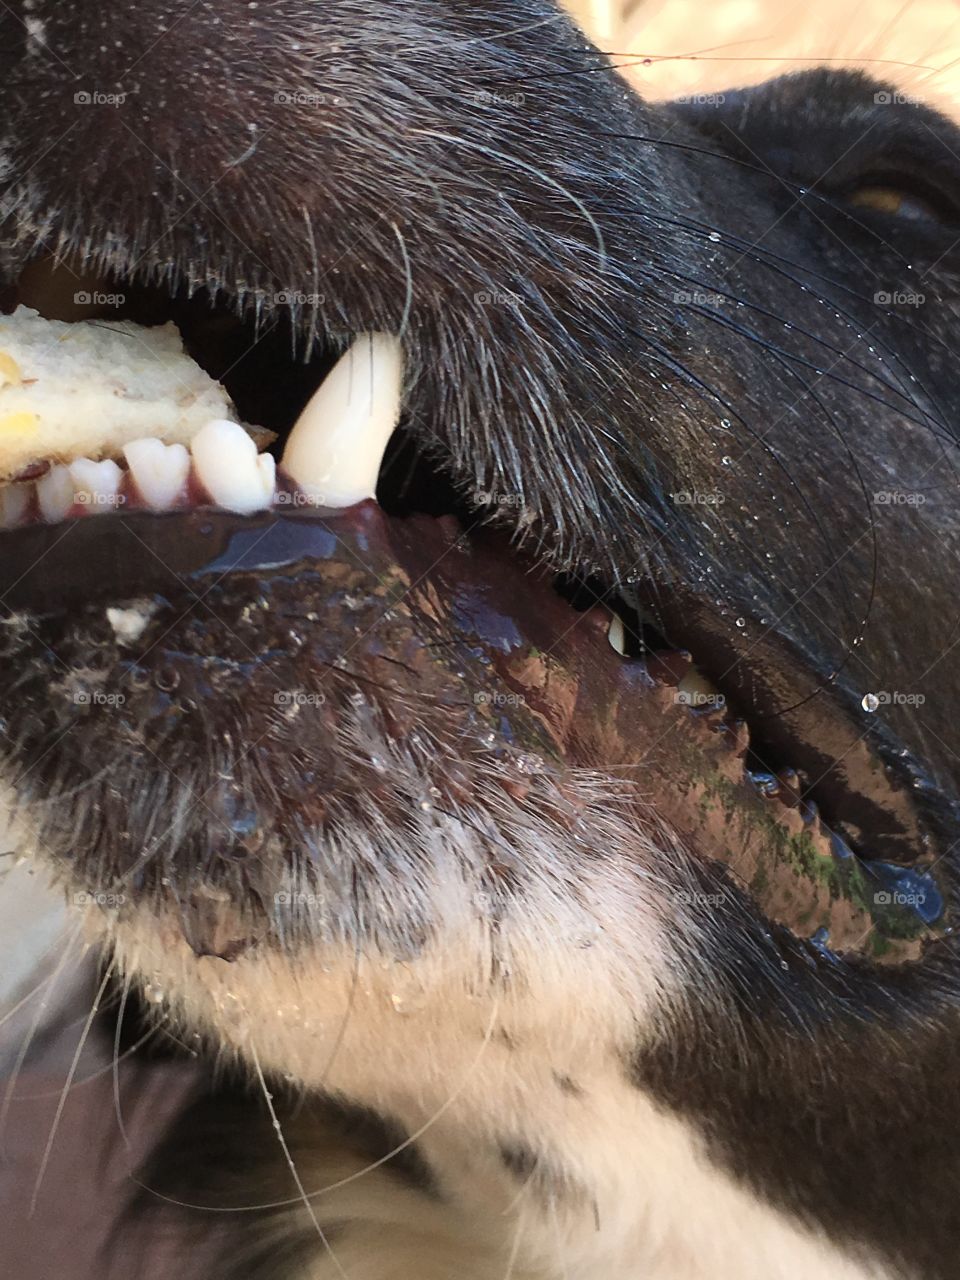 Border collie sheepdog closeup eating, teeth, mouth, snout